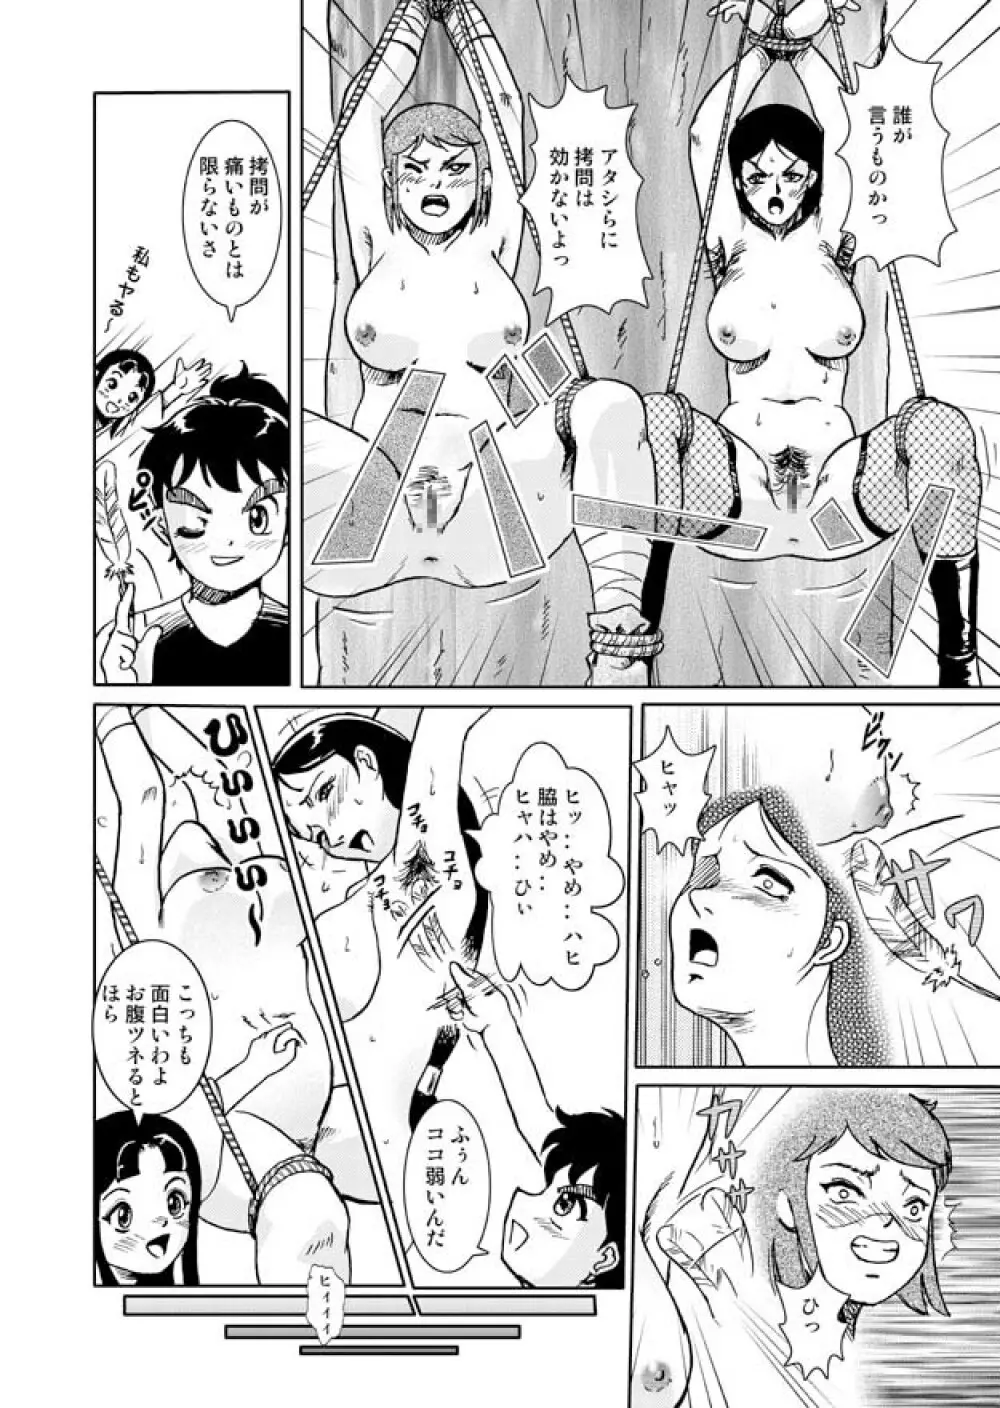 Same-themed manga about kid fighting female ninjas from japanese imageboard. 15ページ